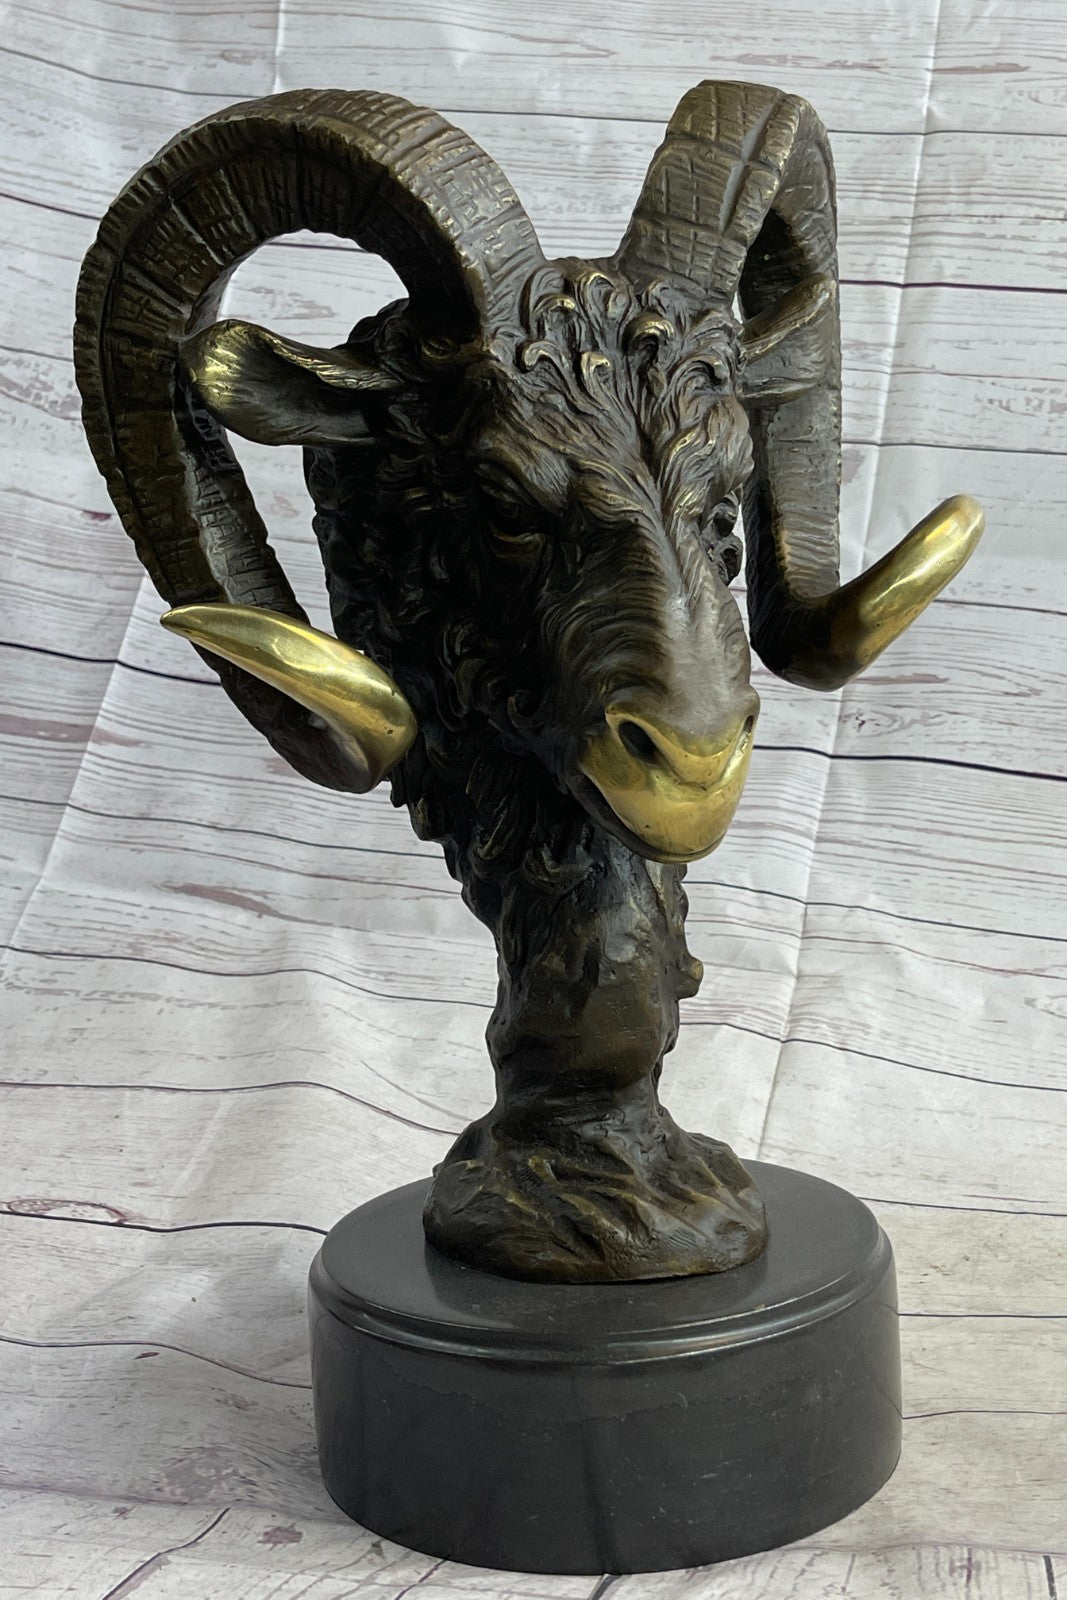 17" Chinese Bronze Wealth Yuanbao Money Animal Sheep Ram Goat Ruyi Ru Yi Statue